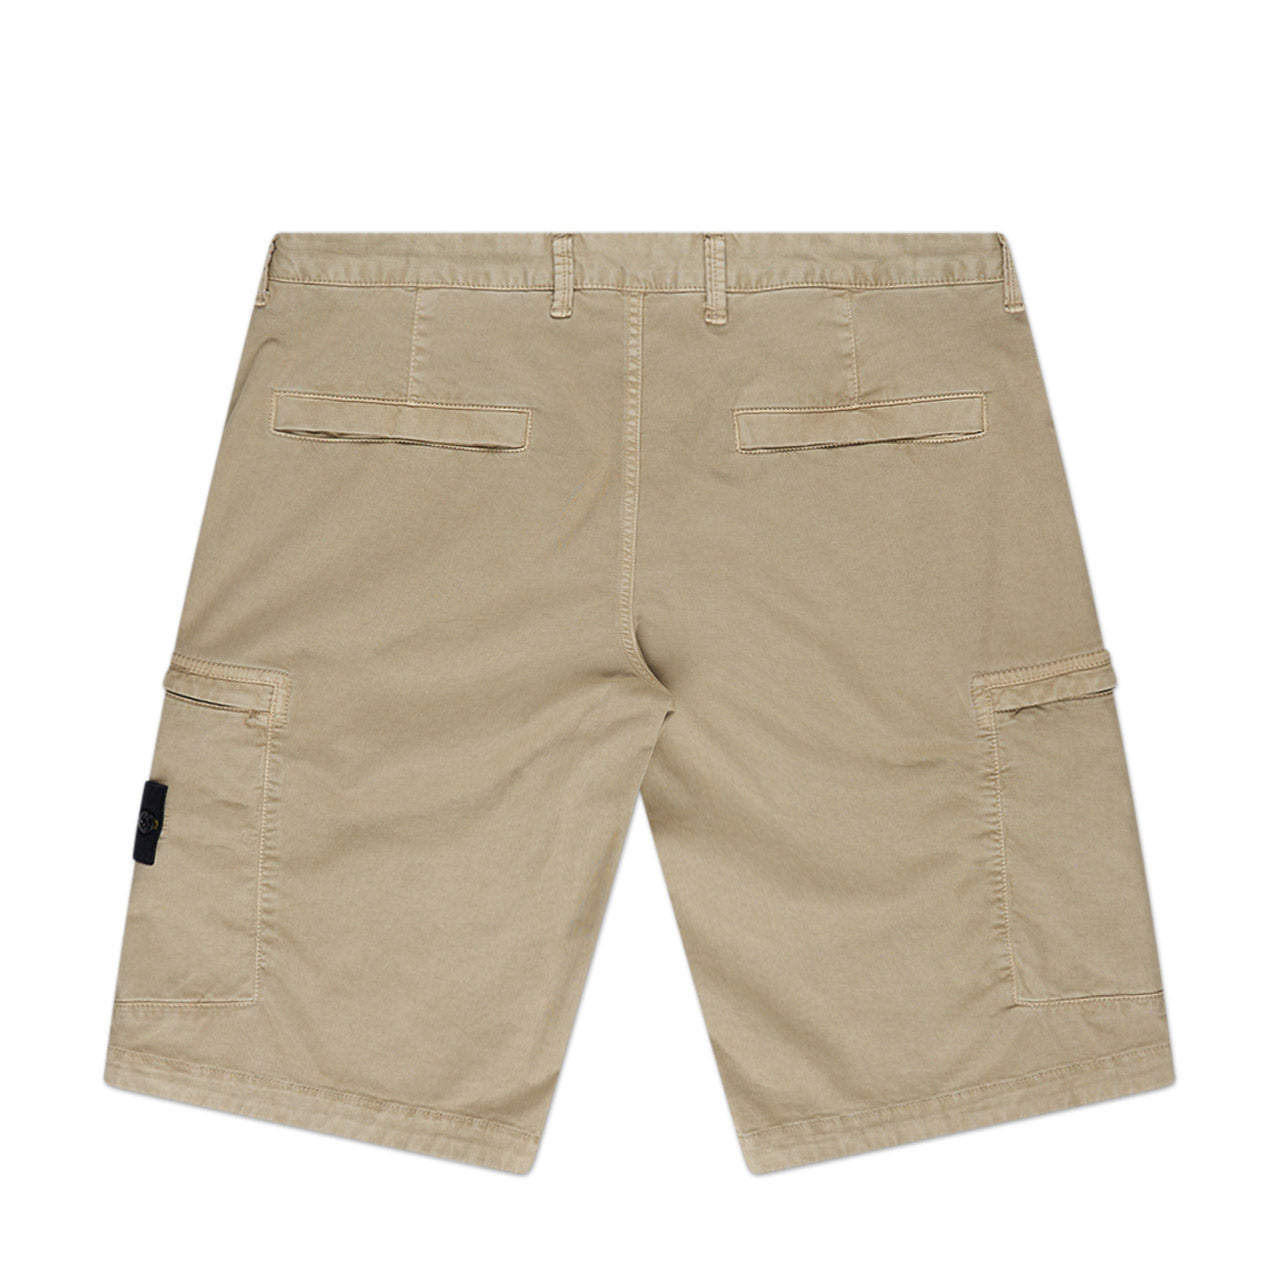 stone island t.co + old bermuda shorts (beige)